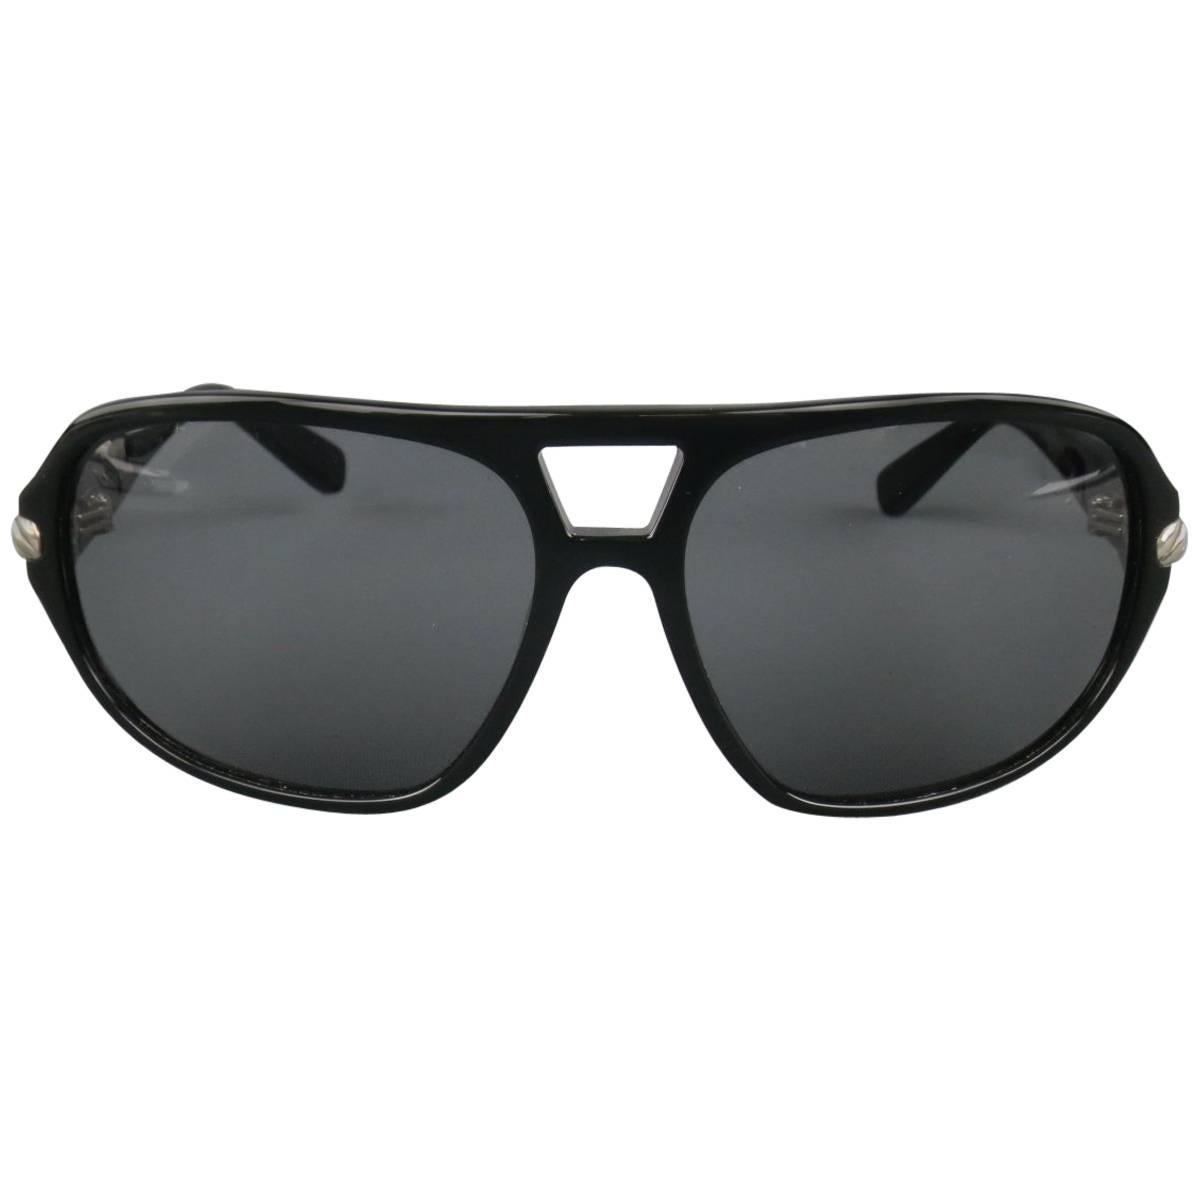 DAVID YURMAN Sunglasses Black Acetate Sterling Silver Aviator Sunglasses